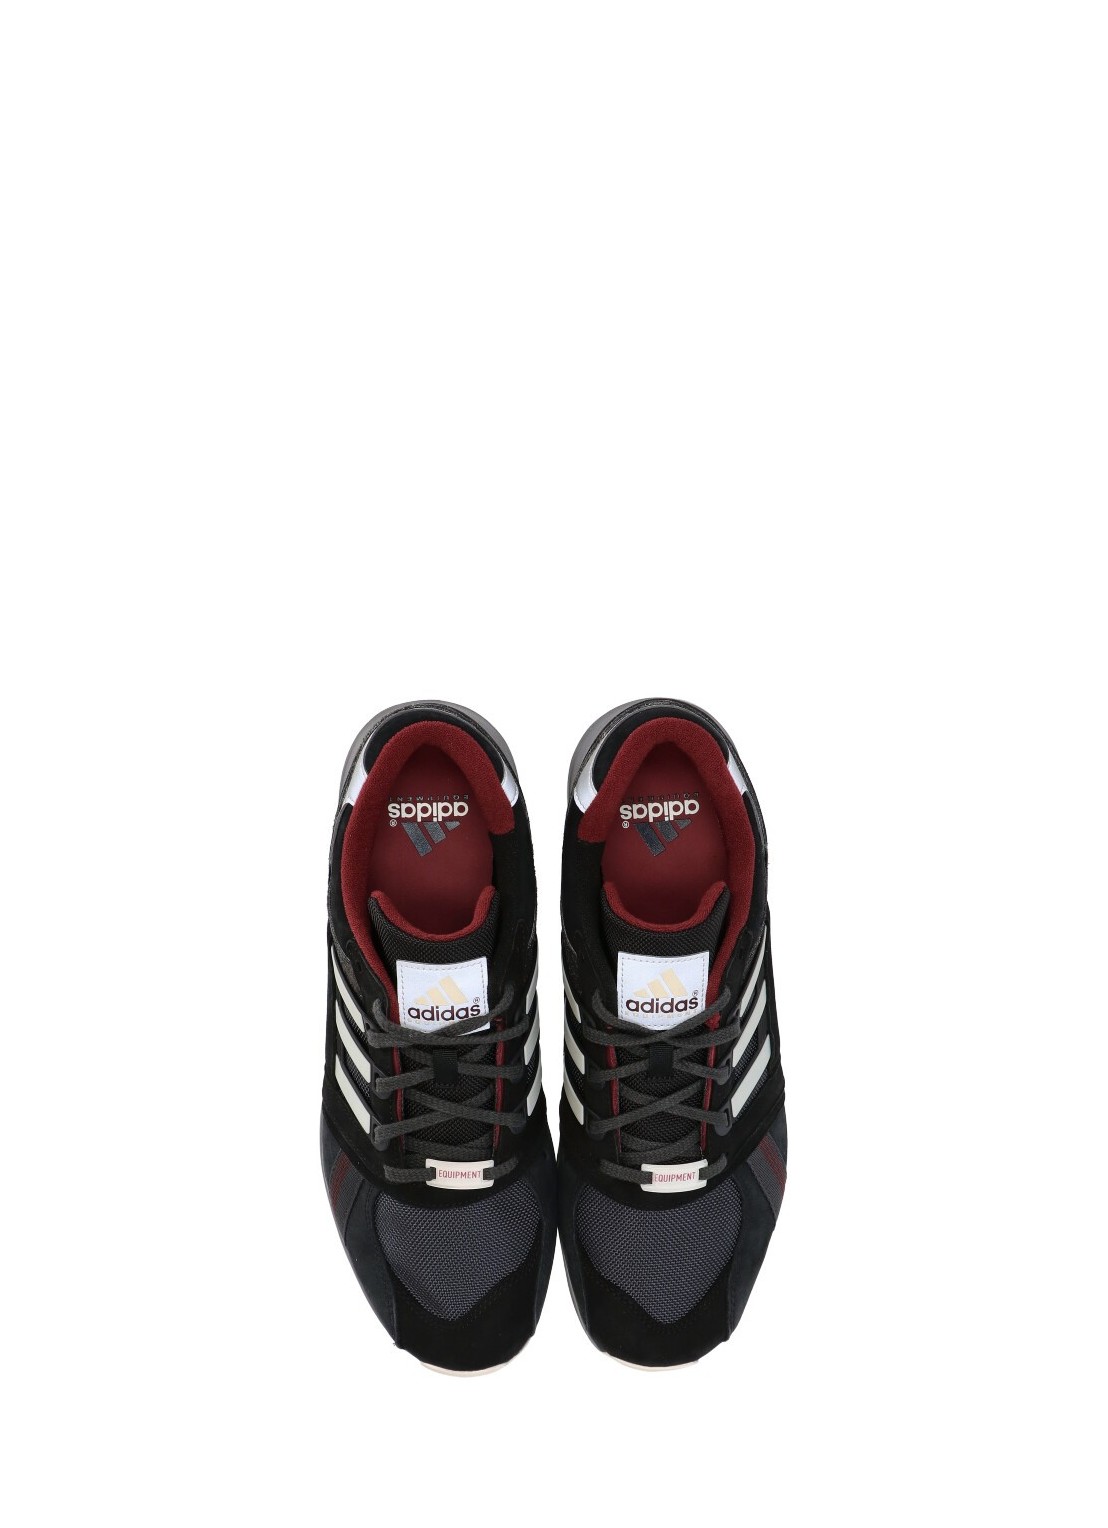 esquema Habitual delicadeza adidas equipment csg 91 - gx6288 core black carbon shadow red Talla 42